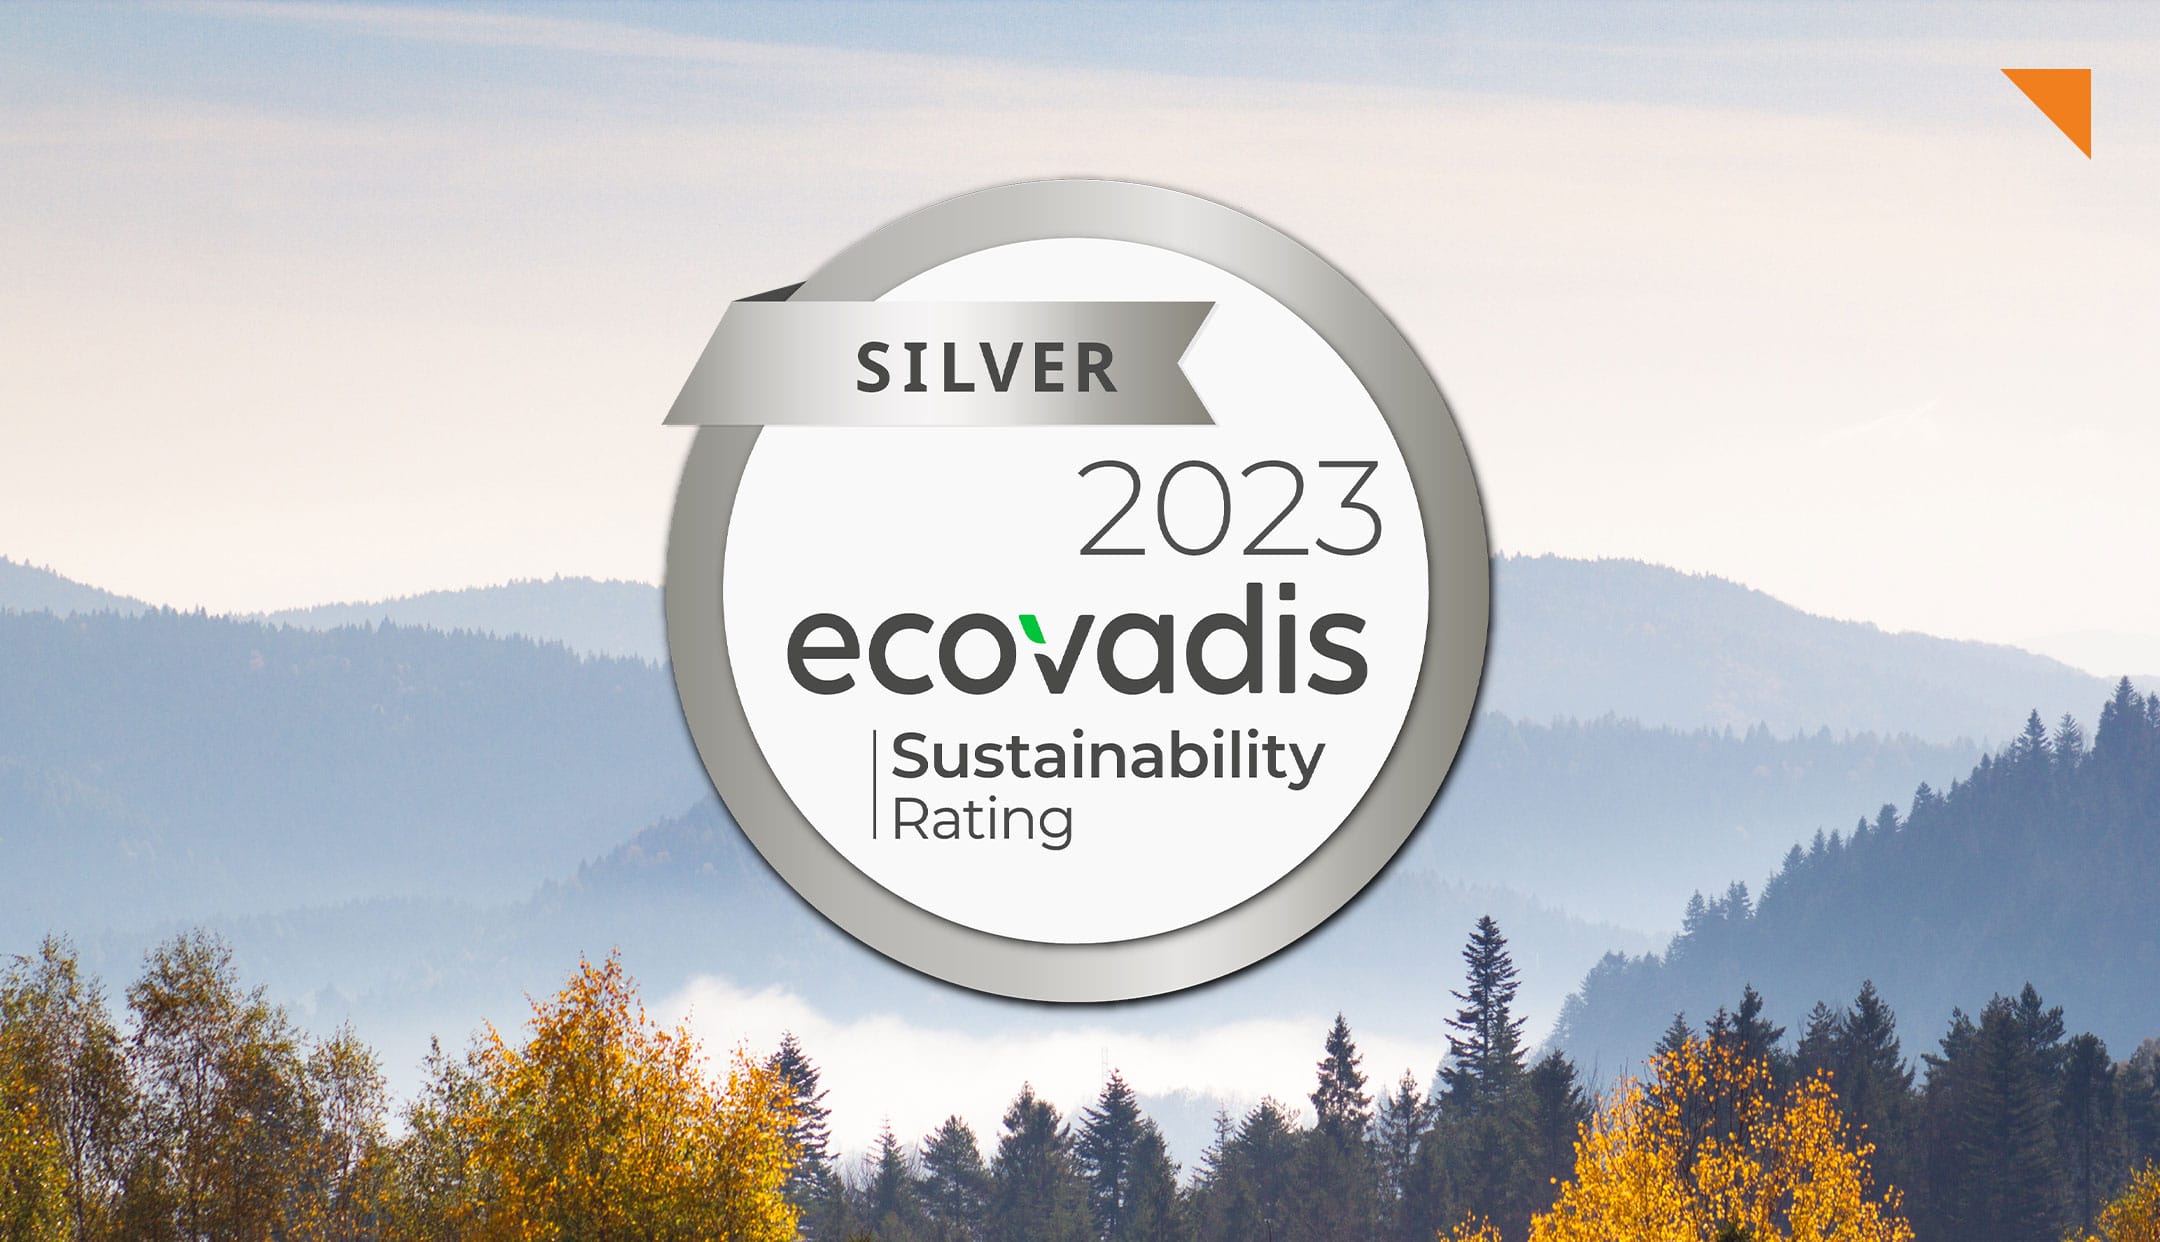 Corporate Social Responsibility: usd 2023 erneut mit EcoVadis Silbermedaille ausgezeichnet